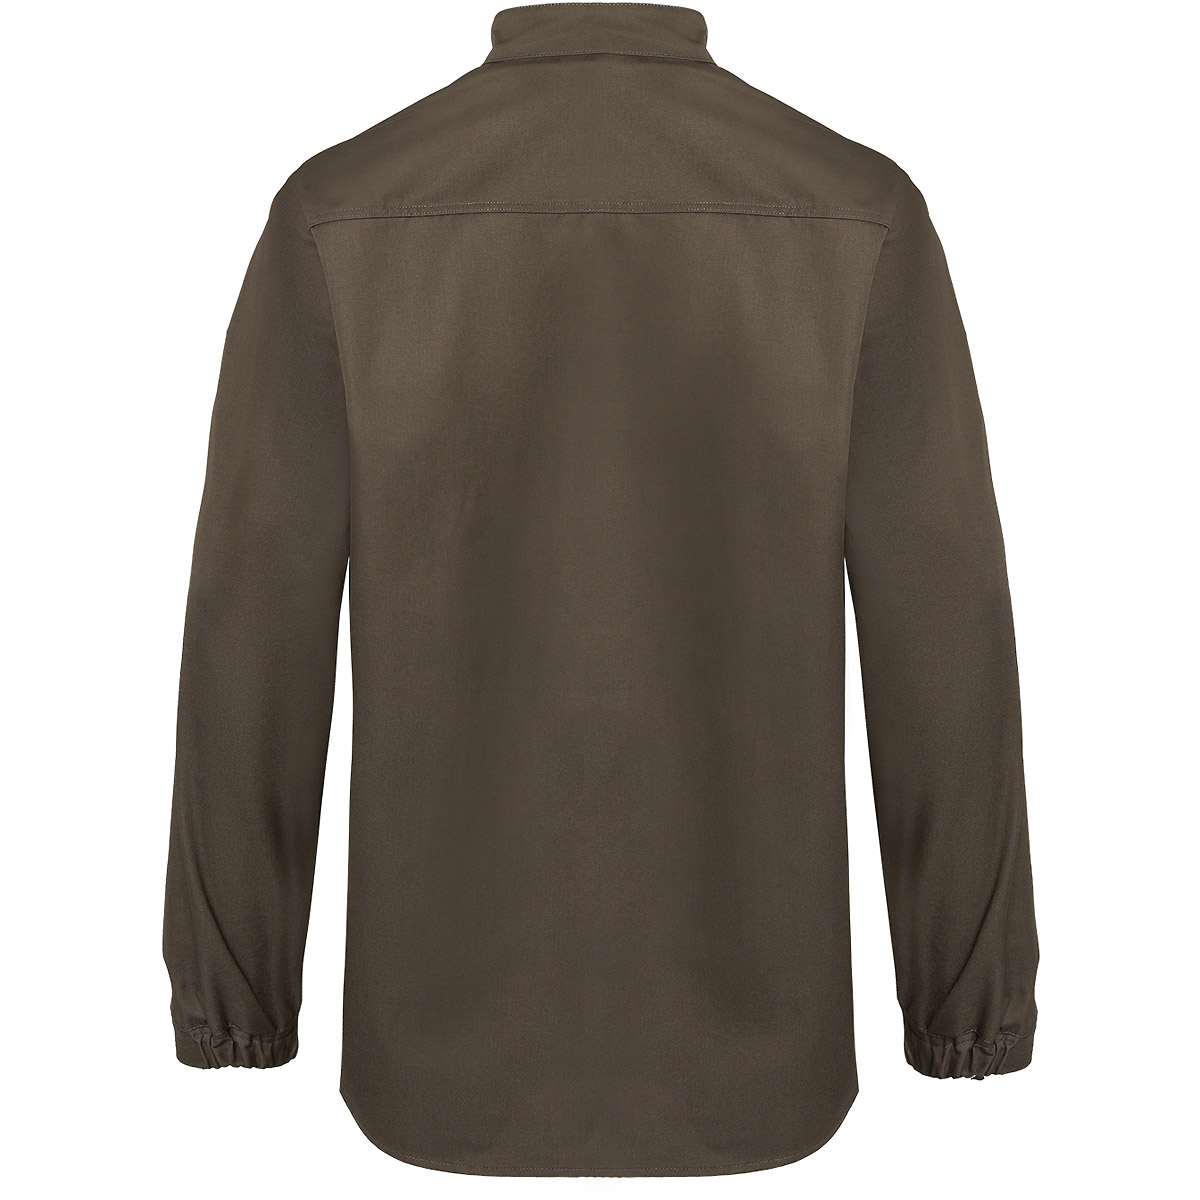 | | Pullover KÜBLER BIOGUARD | tuulzone Shirts & PSA 3 Hemd Arbeitskleidung T-Shirts | Arbeitsschutz |